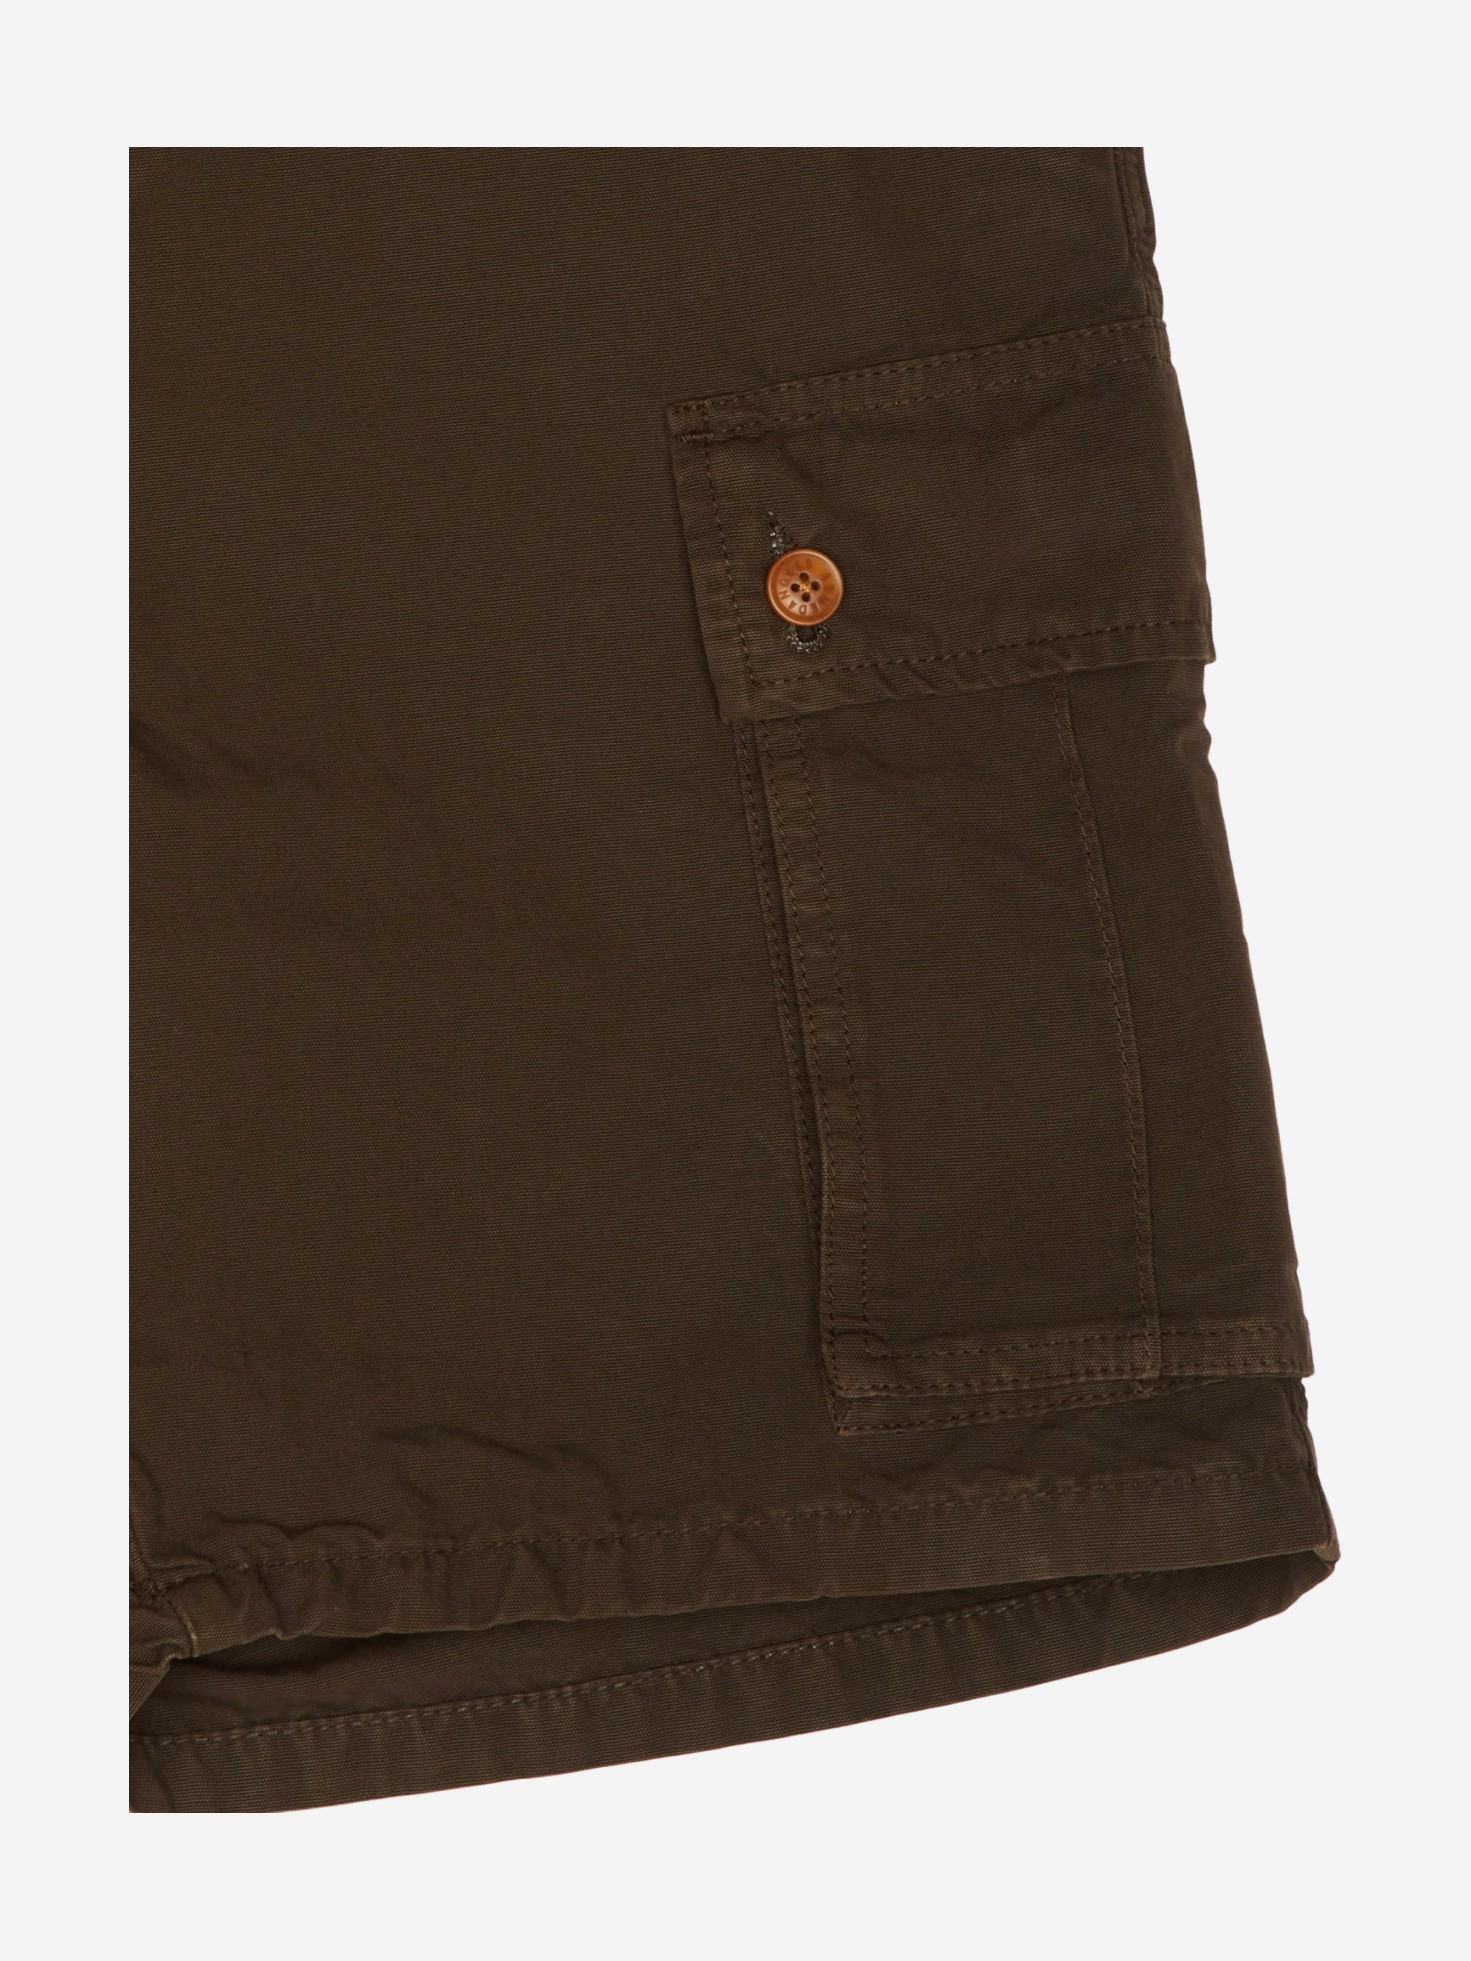 Shorts / Cargo